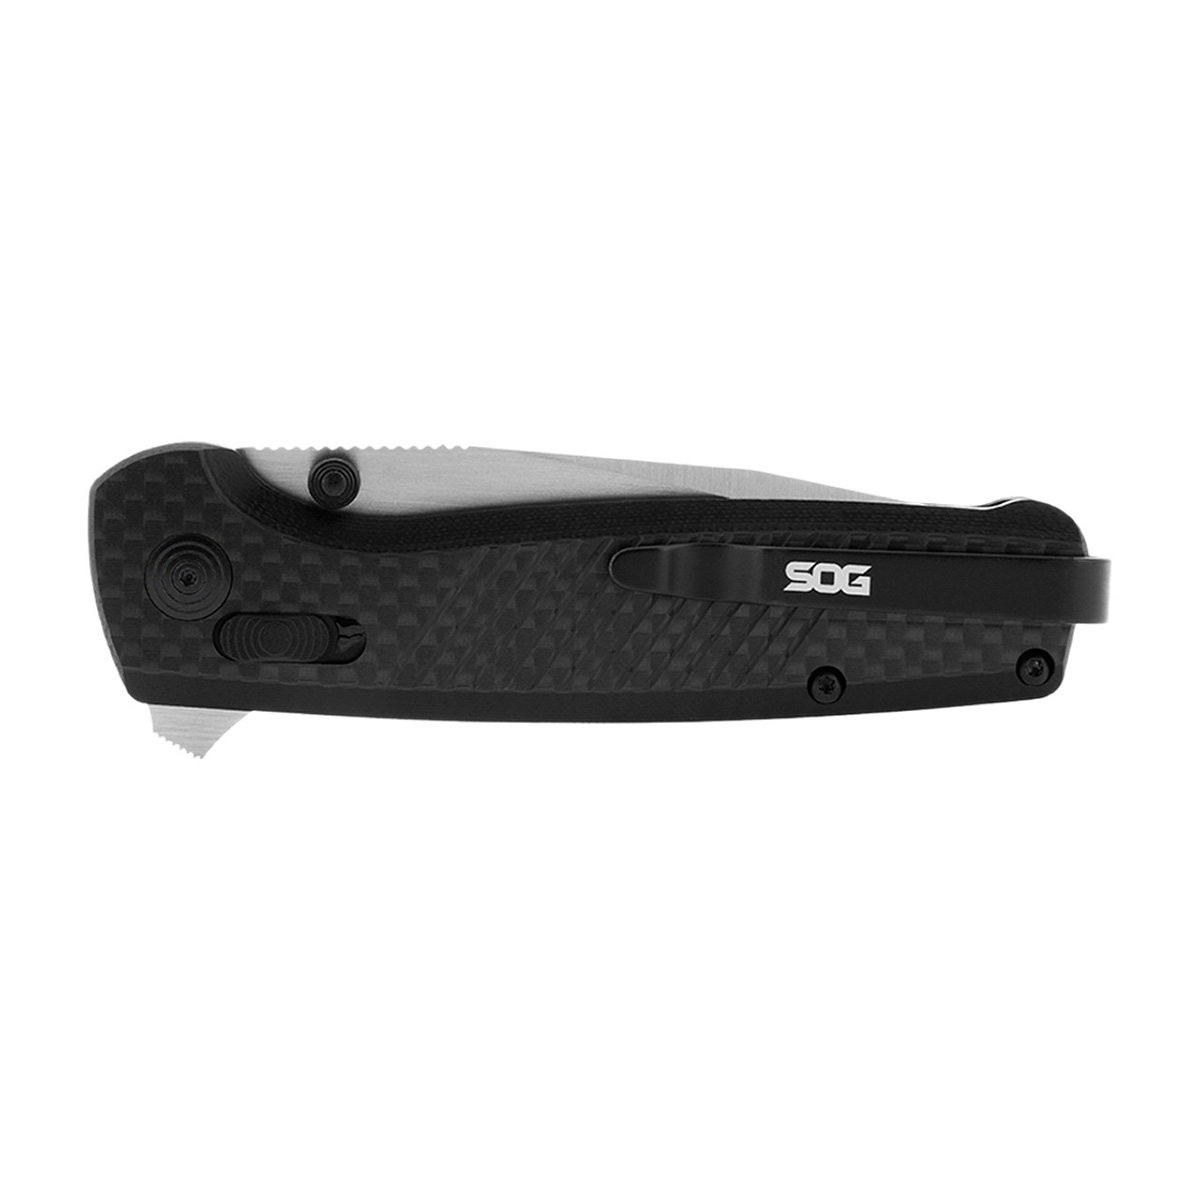 SOG Terminus XR Tactical EDC Folding Knife - S35VN